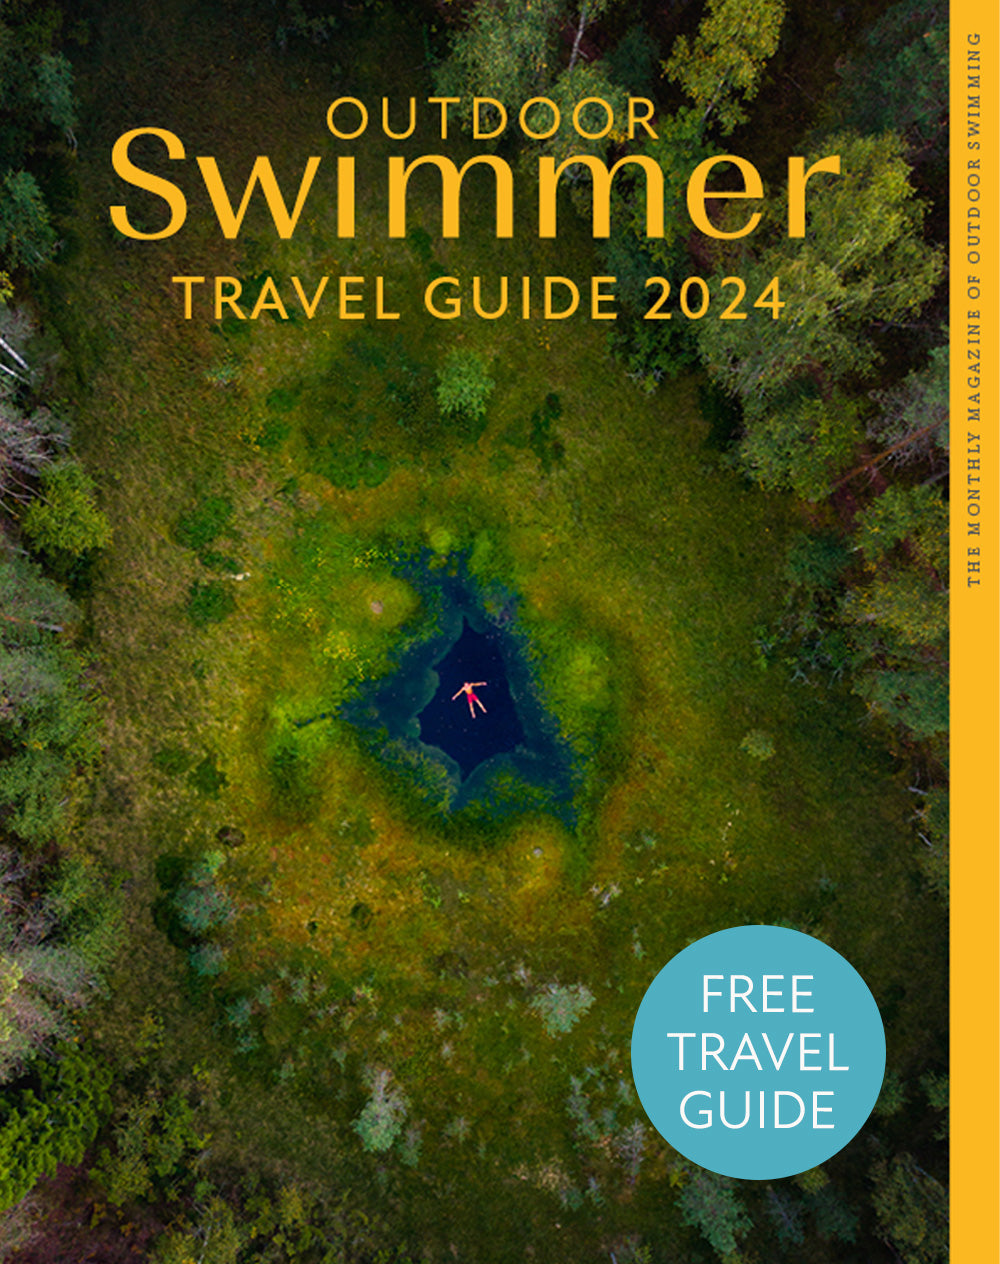 Outdoor Swimmer Magazine – Travel